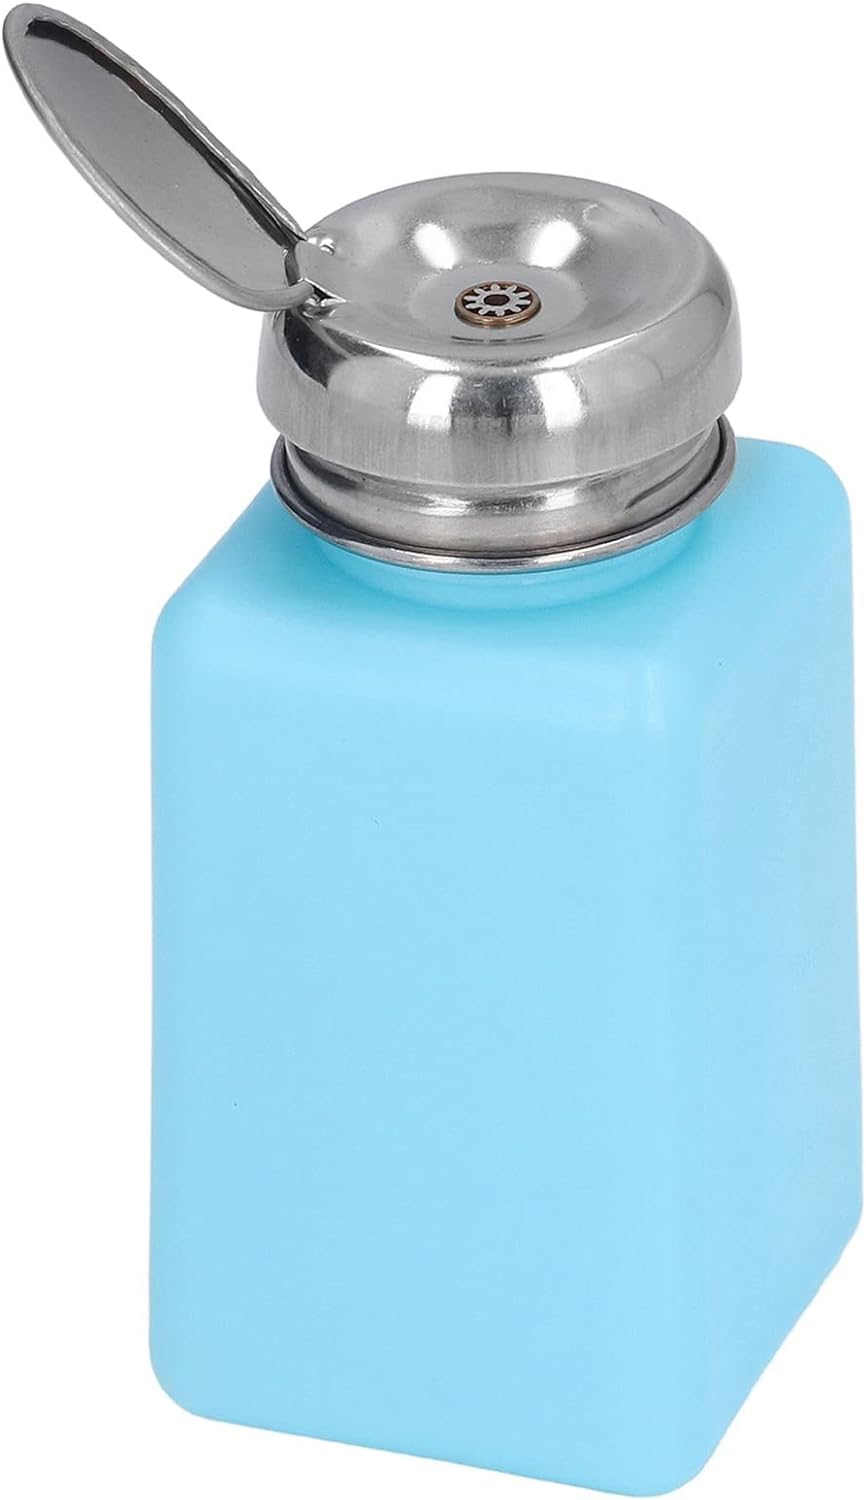 SCHOFIC One Touch Liquid Dispenser Pump, ESD Safe durAstatic Square Bottle, 6 oz, High Density Polyethylene/Stainless Steel - Blue